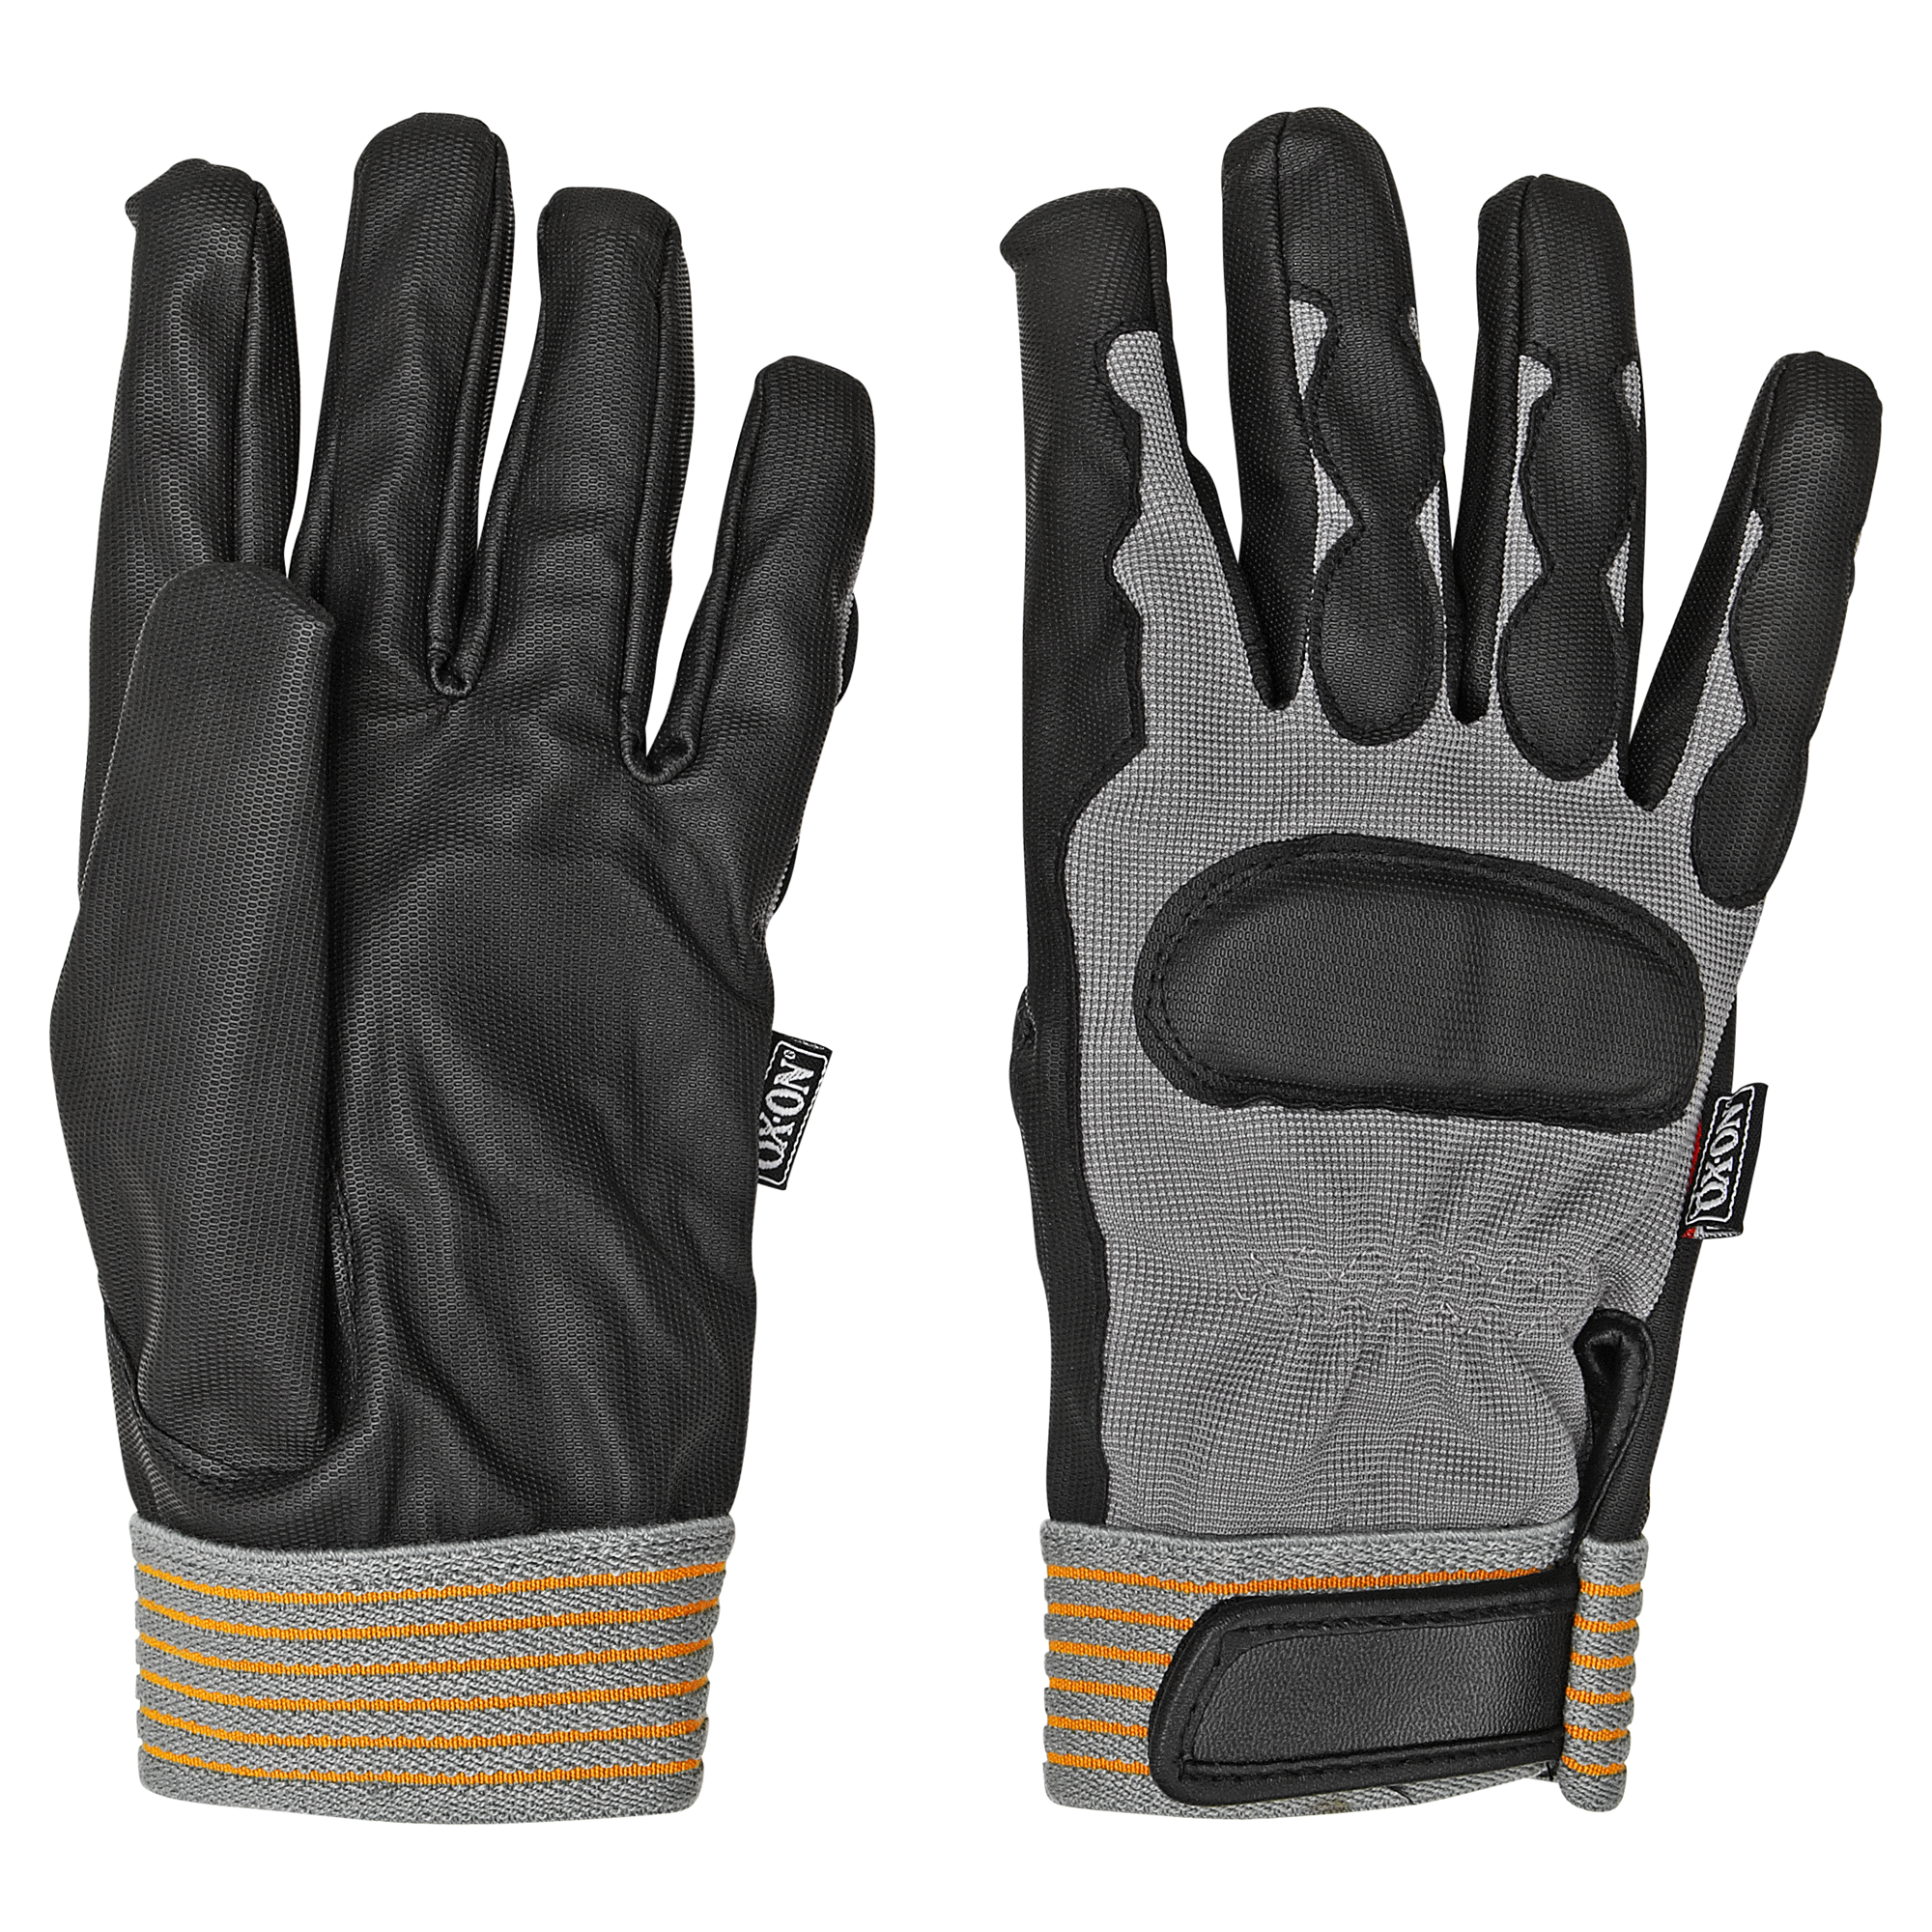 SB-Handschuhe "X-streme 3" grau/schwarz Gr. 10 + product picture